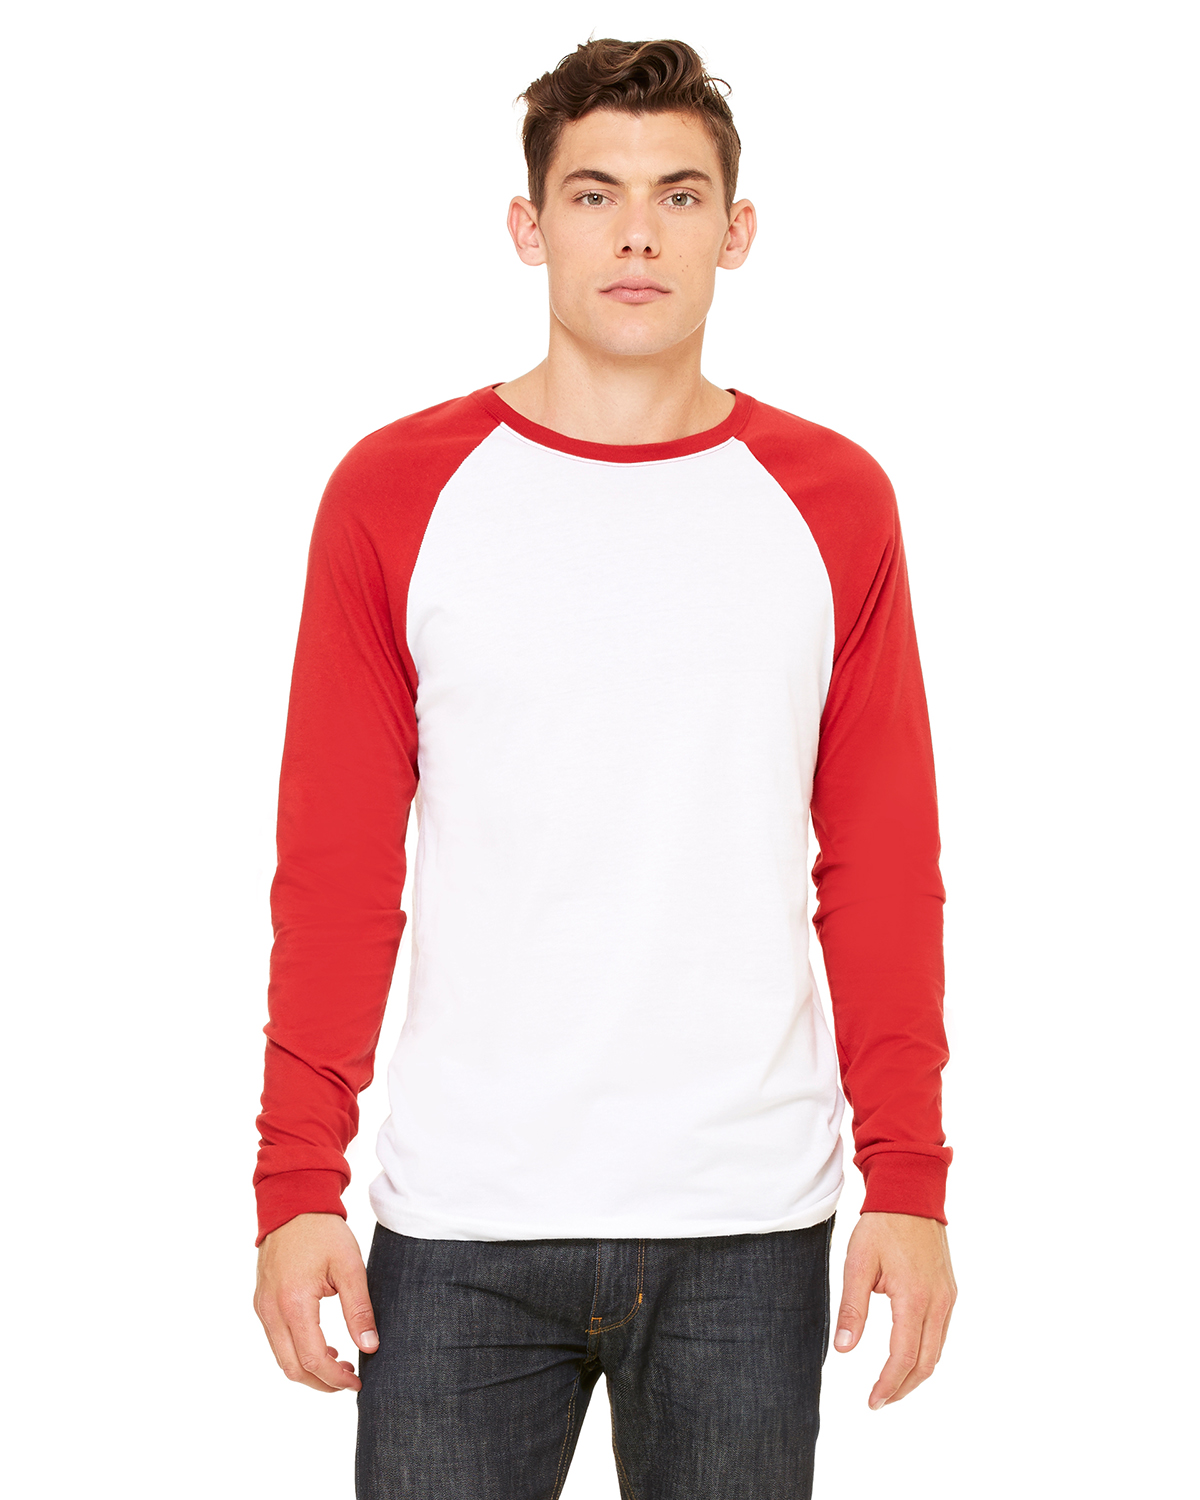 white and red baseball shirt